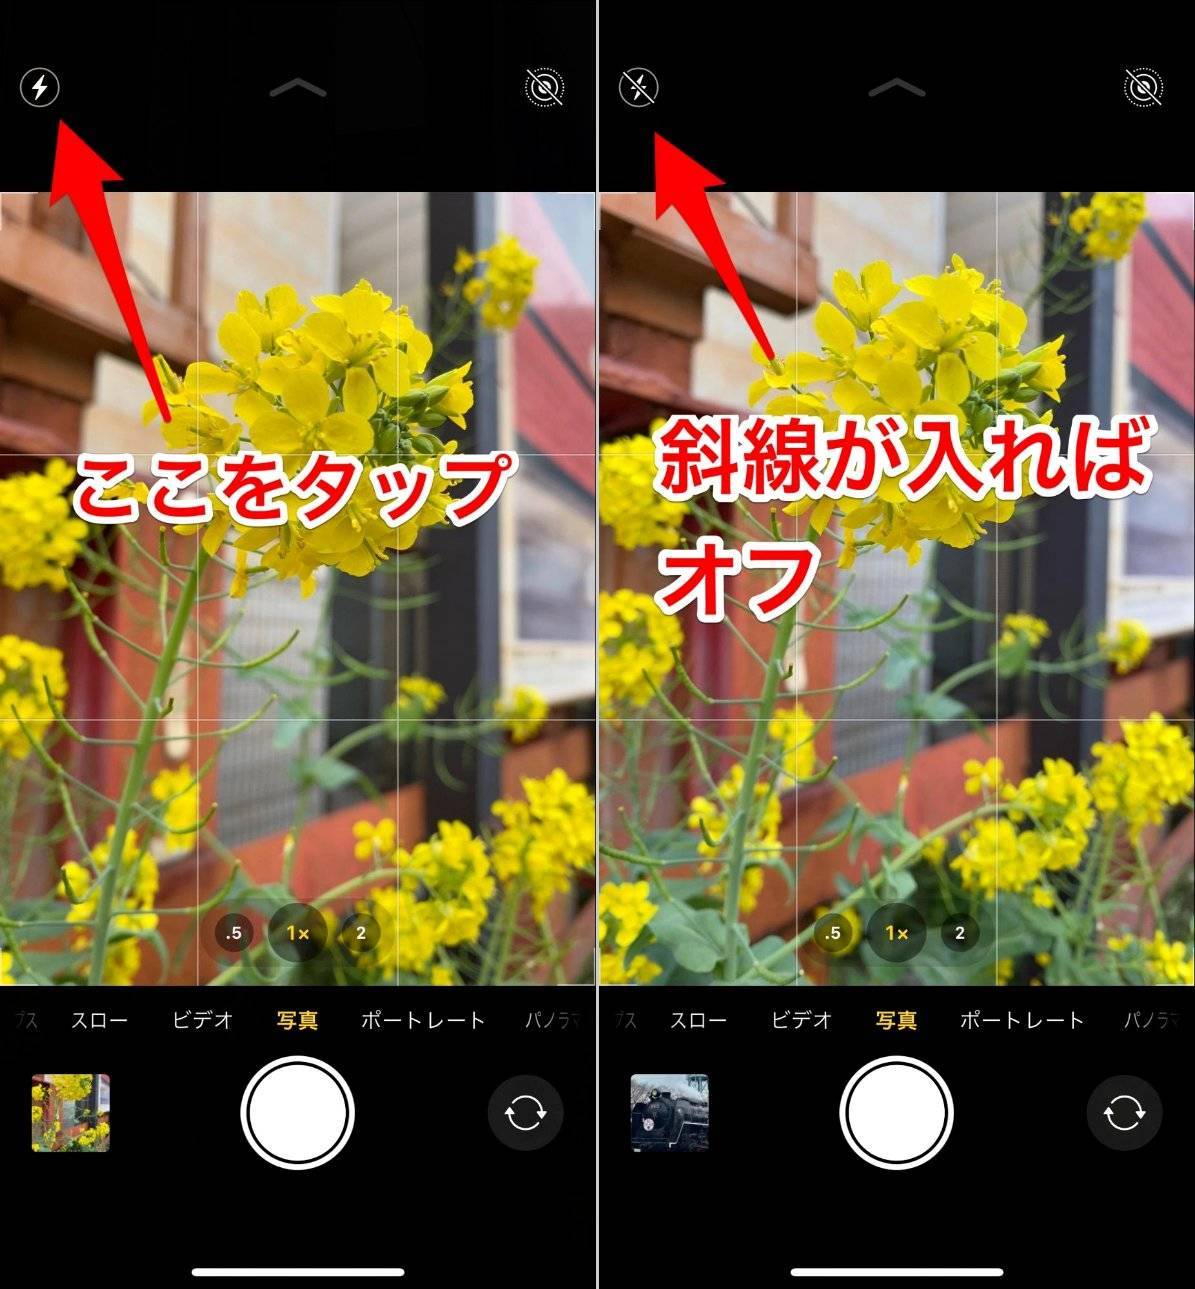 Iphoneカメラの接写 マクロ撮影 方法 綺麗な撮り方 設定を徹底解説の画像 8枚目 Appliv Topics